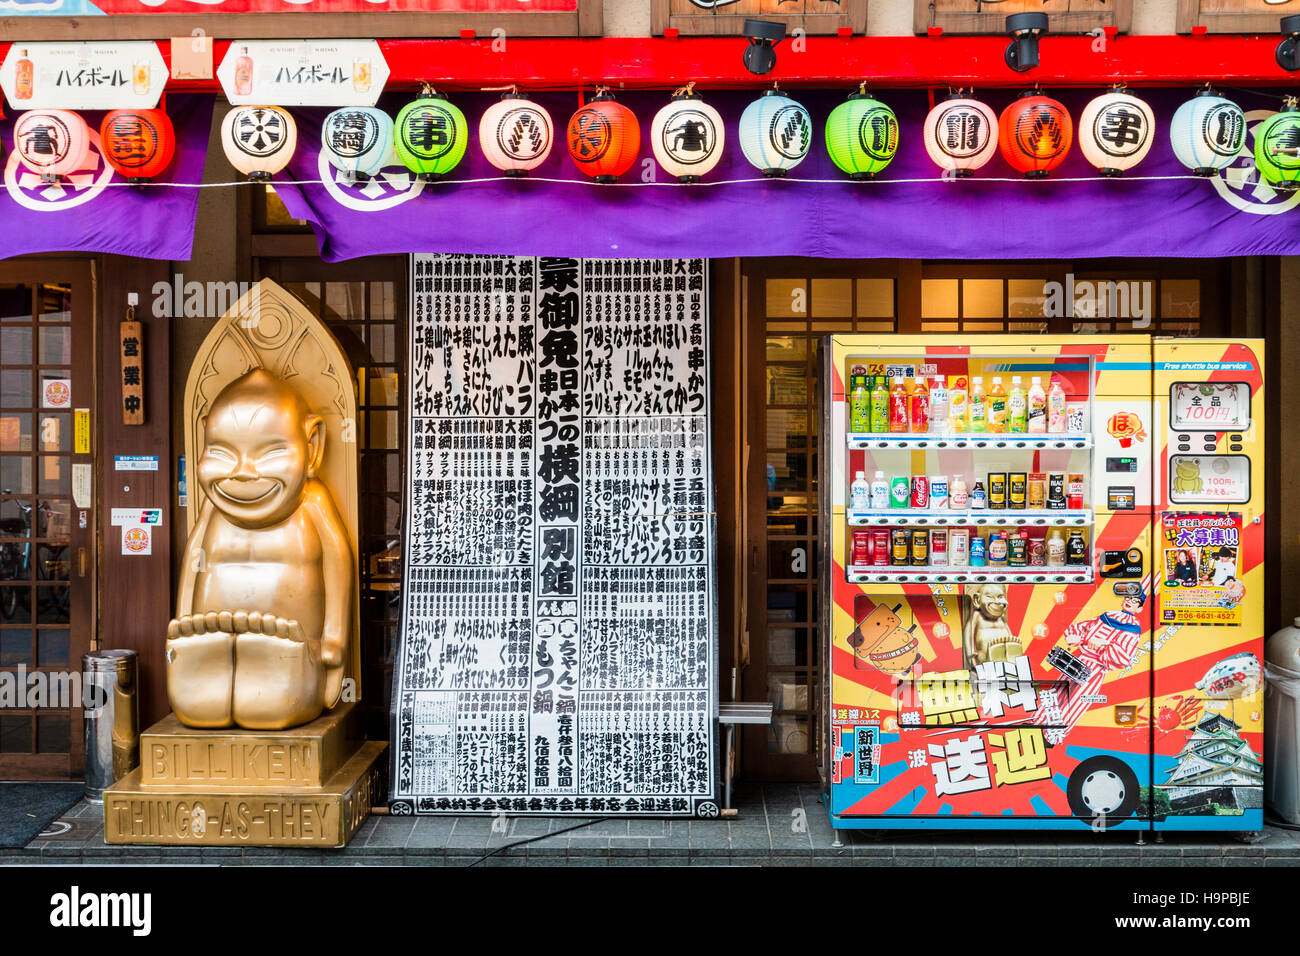 Giappone, Osaka, Shinsekai. Billiken popolare statua fuori del ristorante yokozuna, vendita Kushi-katsu, un famoso Osaka specialità alimentari. Distributore automatico. Foto Stock